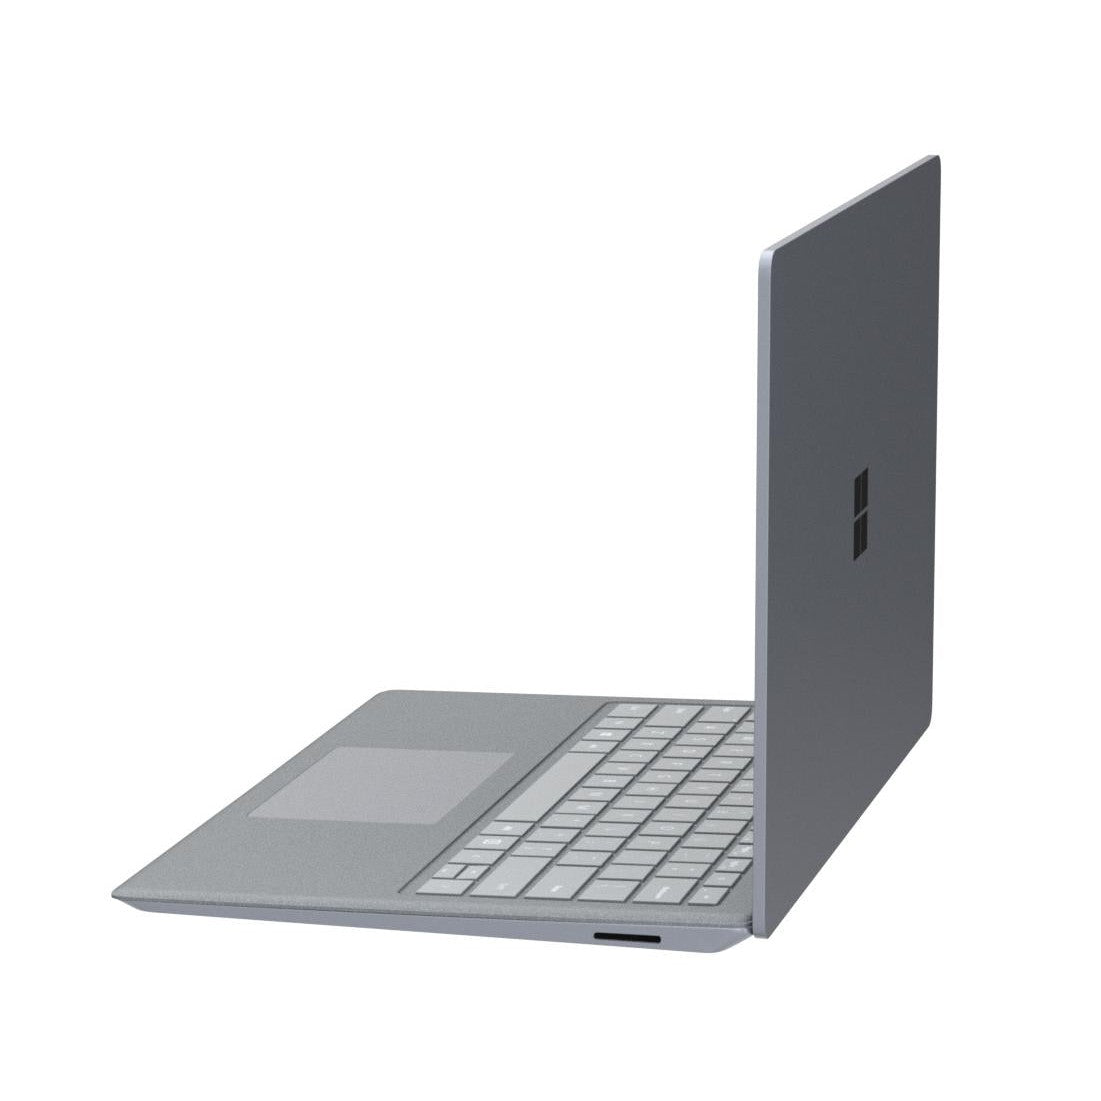 Microsoft Surface Laptop 2 LQR-00003 Intel Core i7-8650u 8GB RAM 256GB SSD 13.5" - Silver